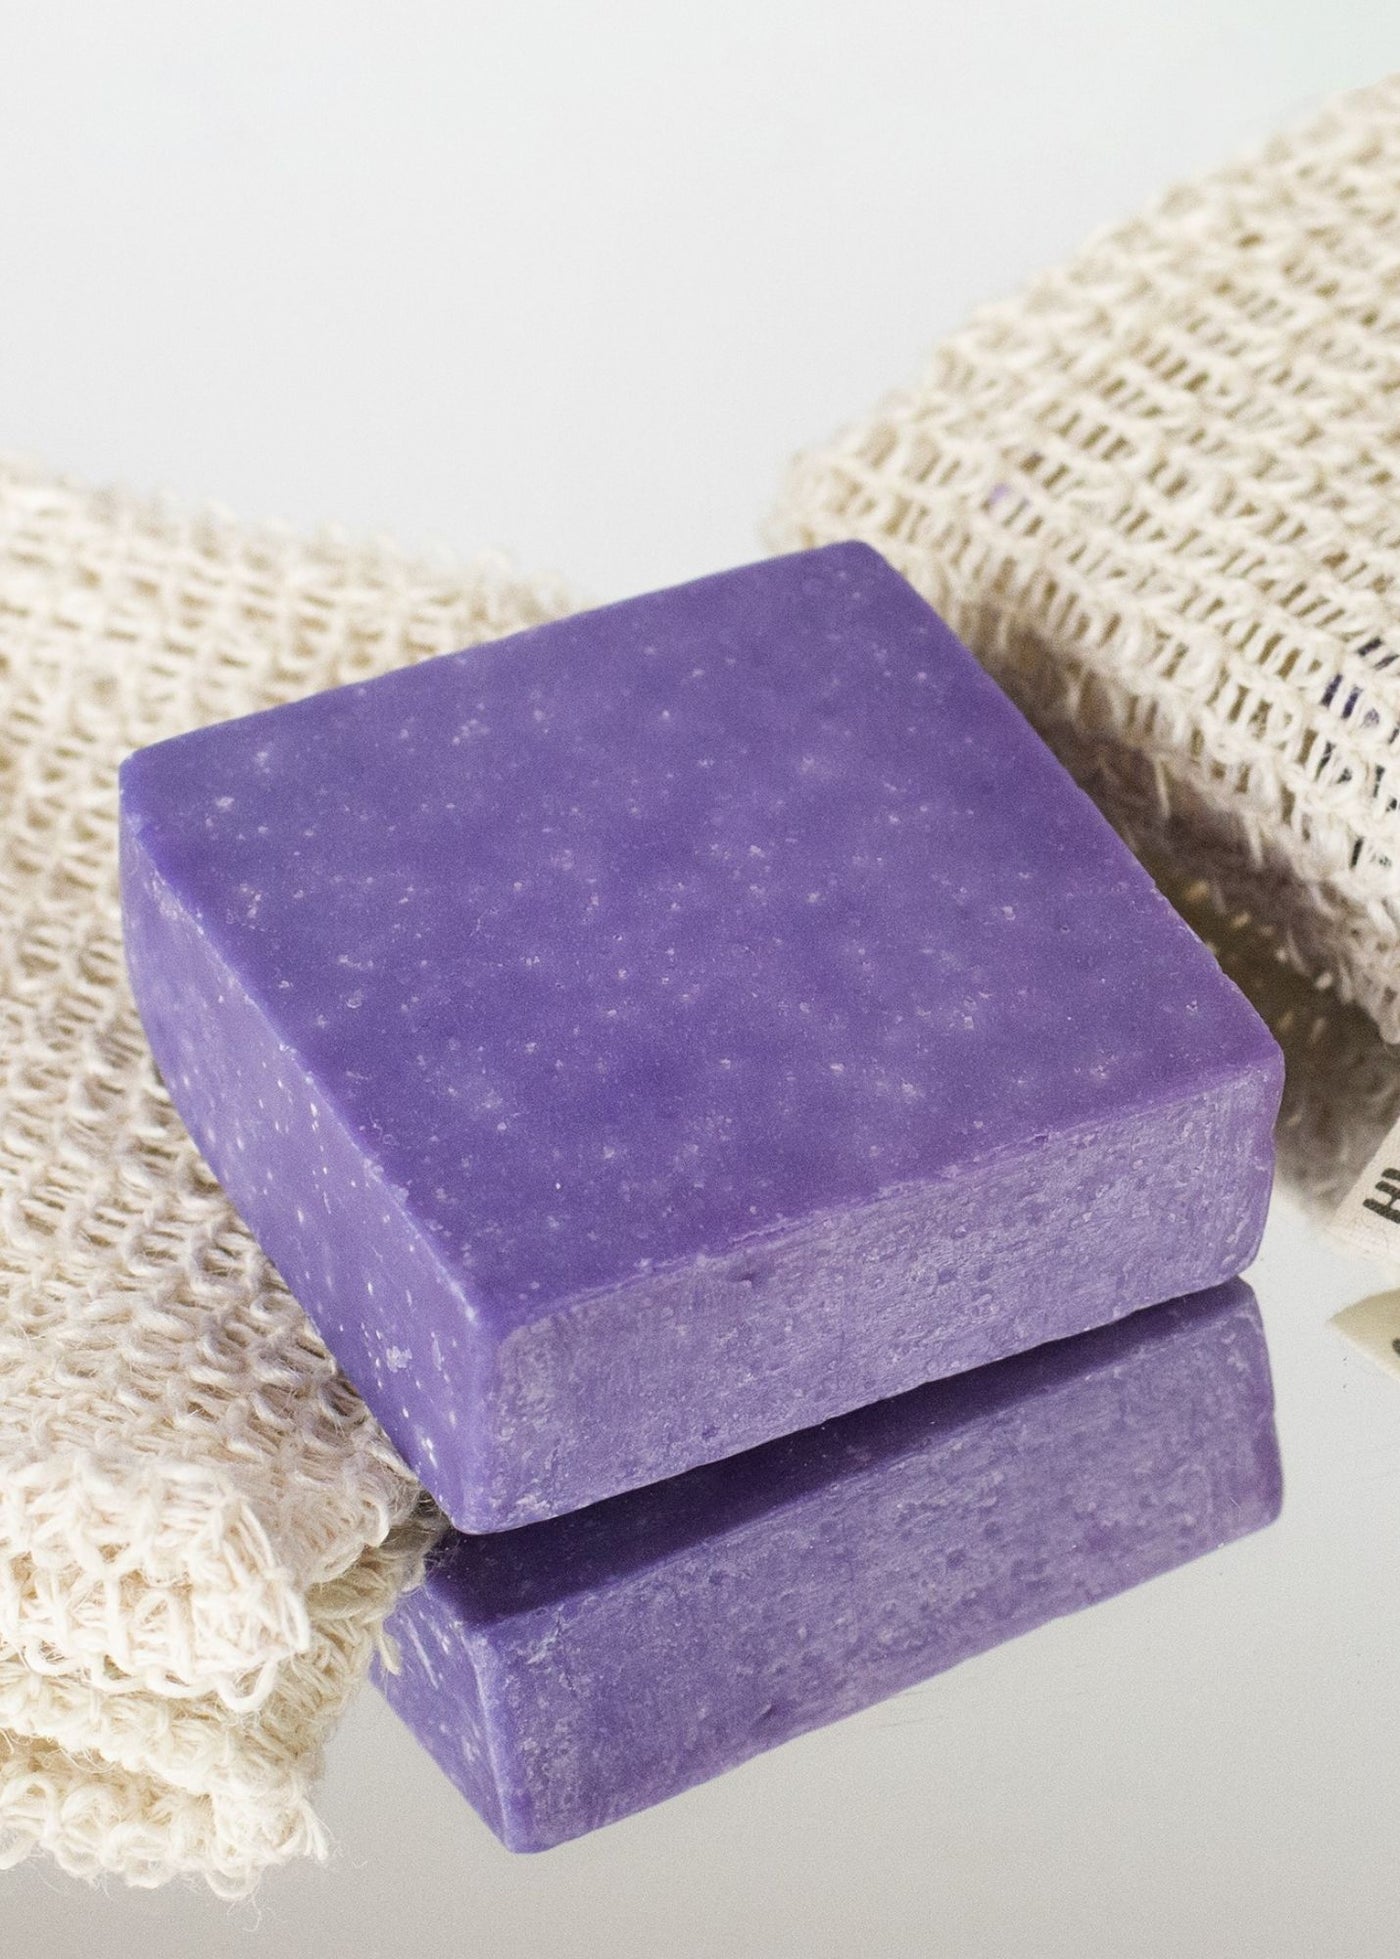 Lavender Bar Soap w/Loofa Bag - 2 Pack